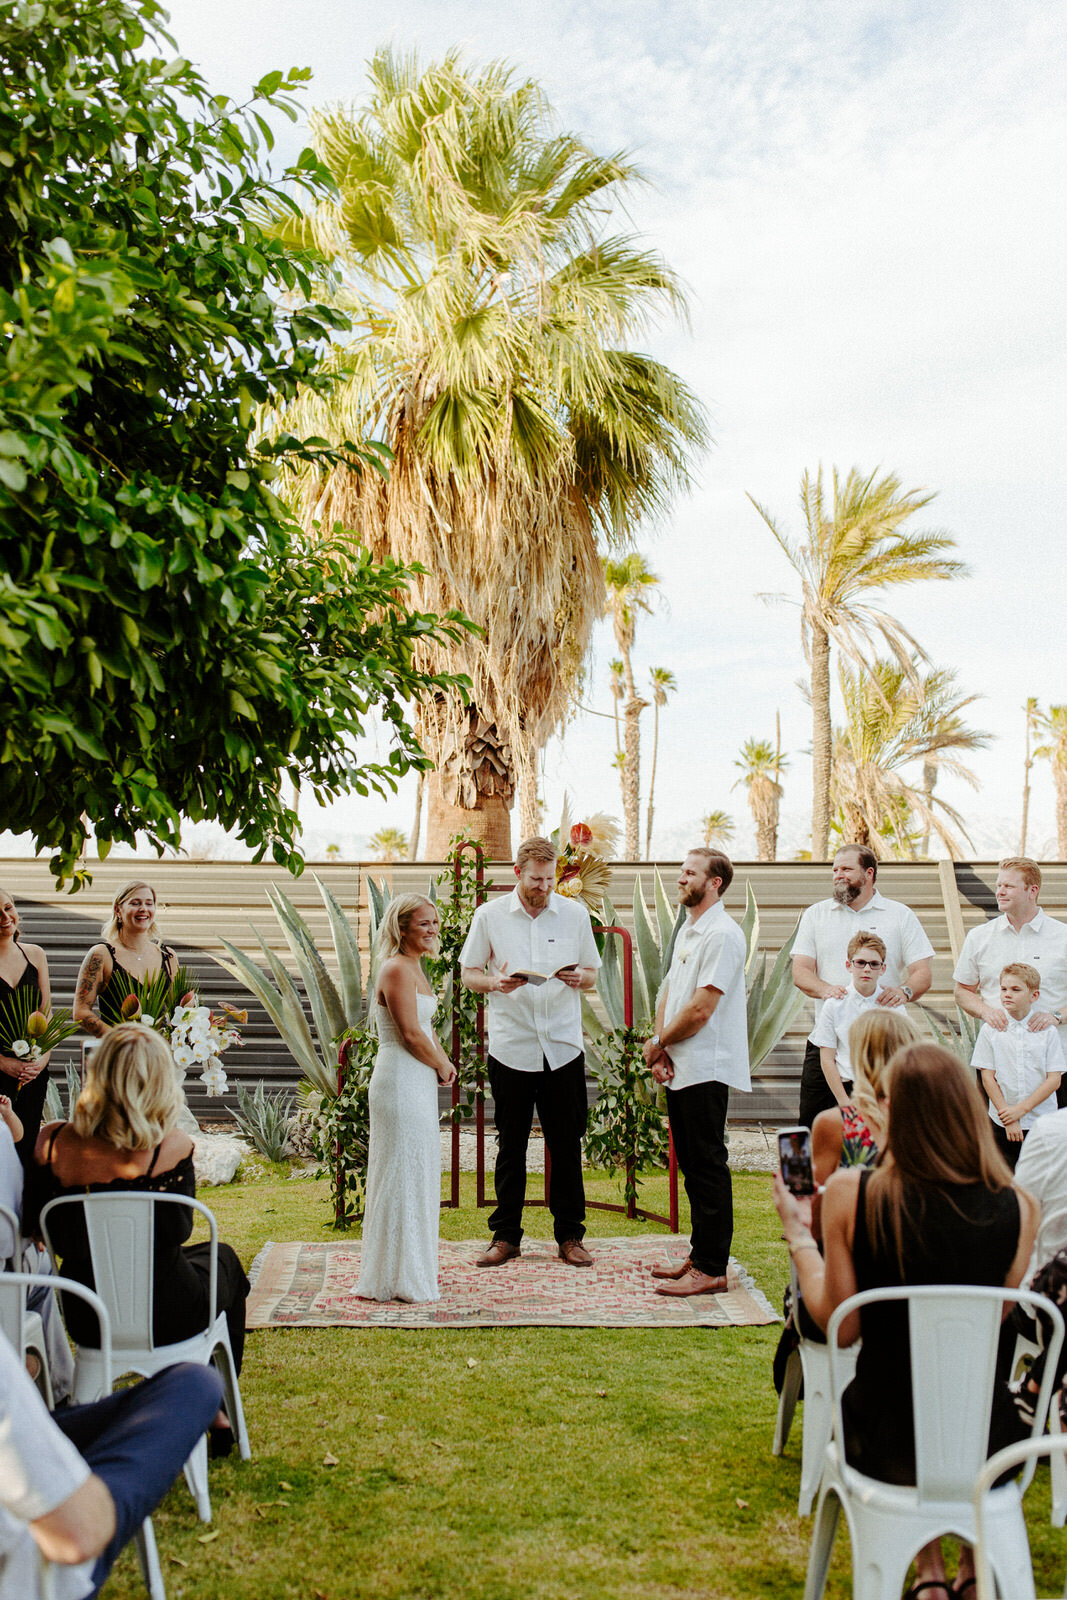 Brianna-Broyles-Photography-COVID-Backyard-Wedding-Palm-Springs-Ceremony-8.jpg